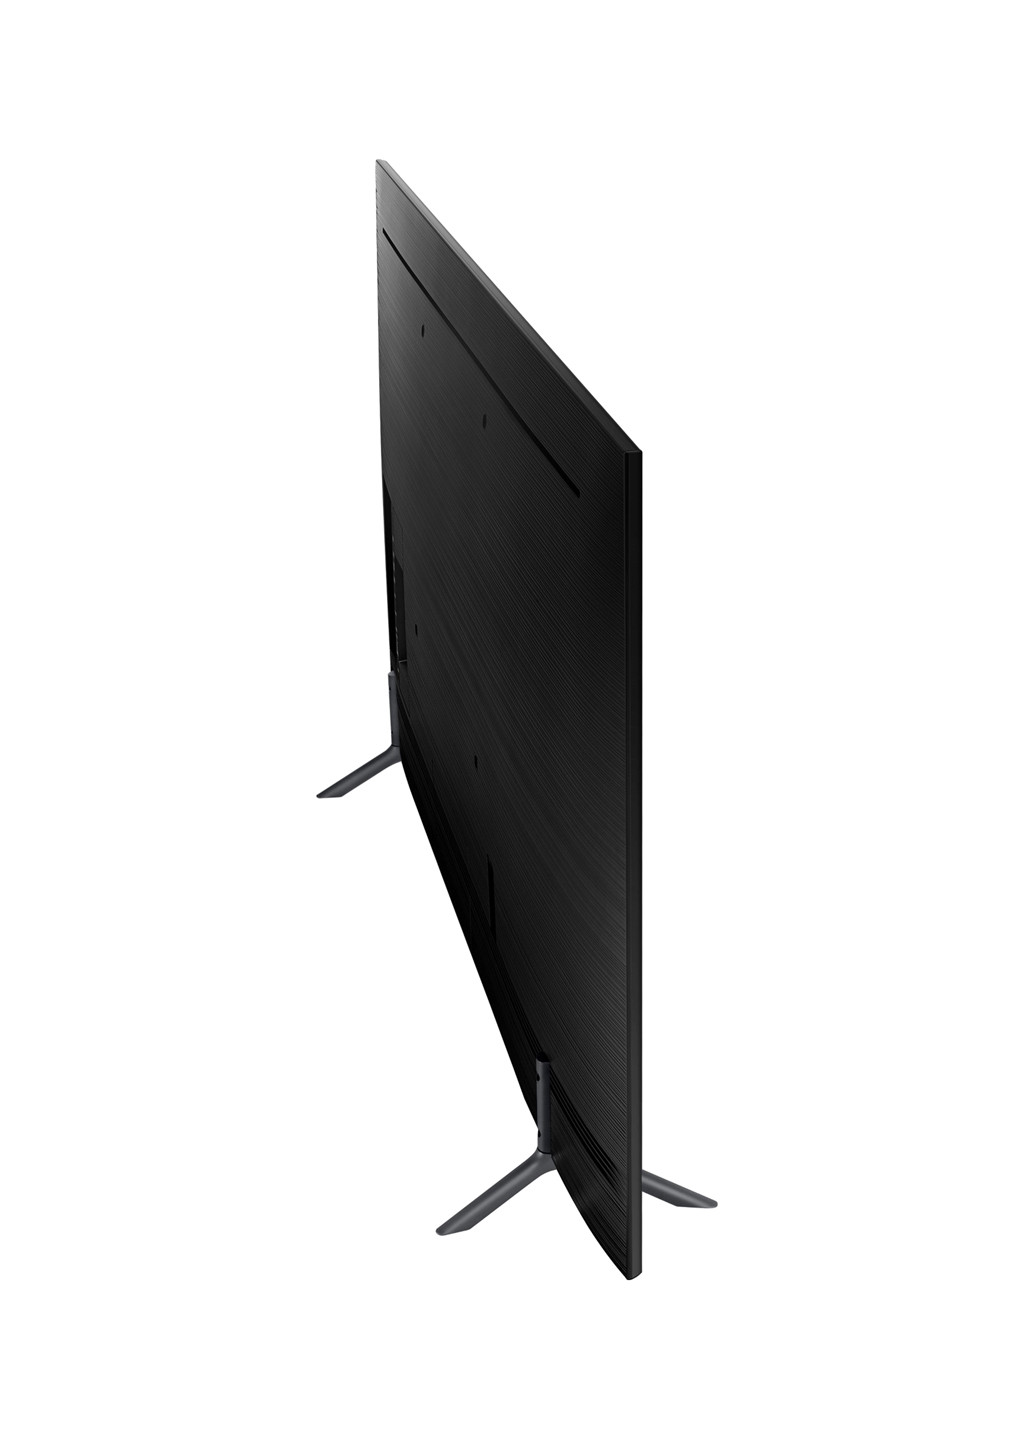 Телевизор Samsung ue50ru7100uxua (135527012)